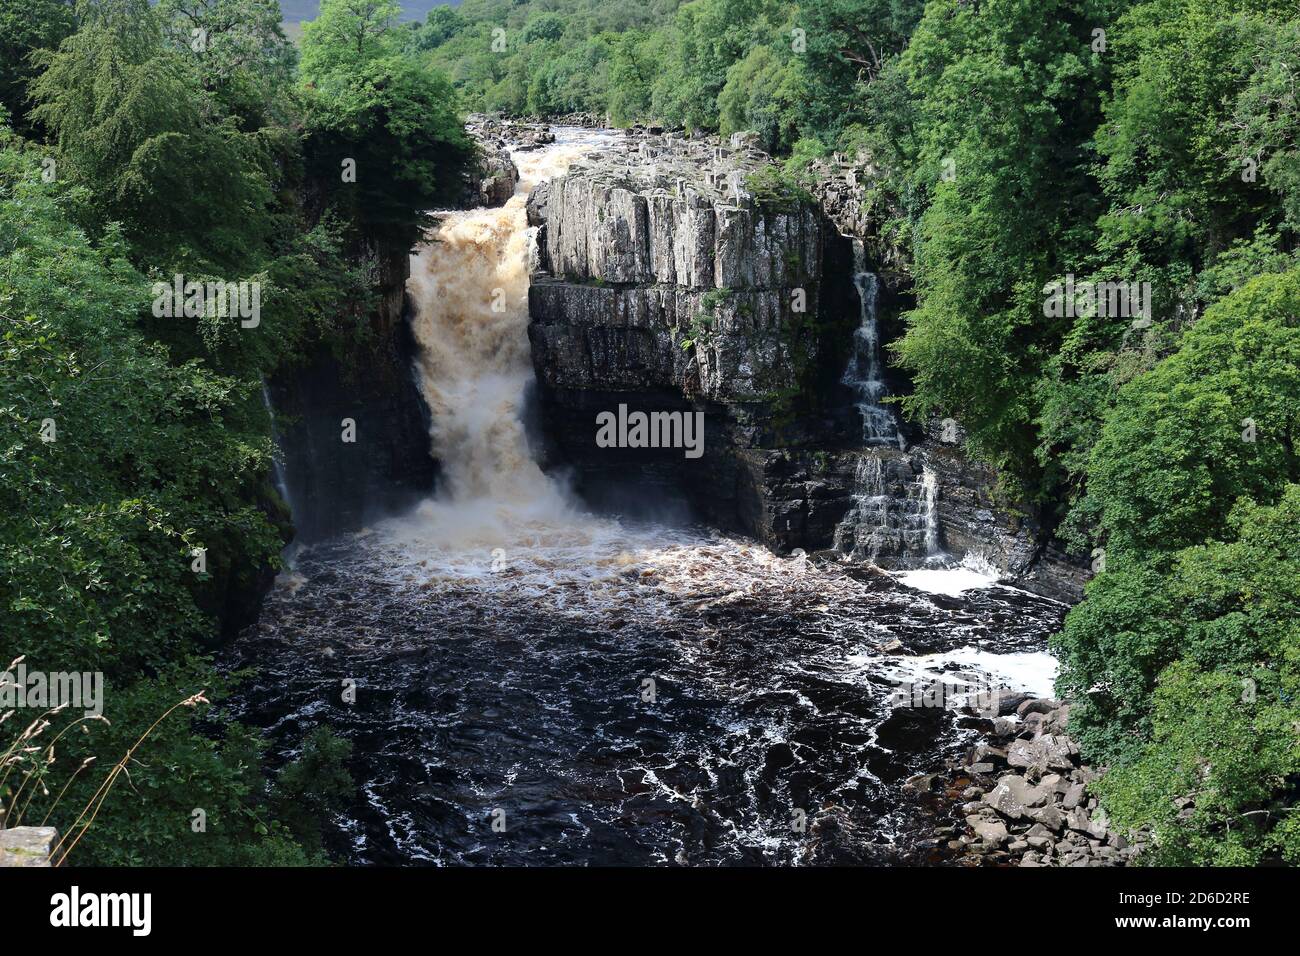 High Force Waterfall, Upper Teesdale, Condado de Durham. Foto de stock